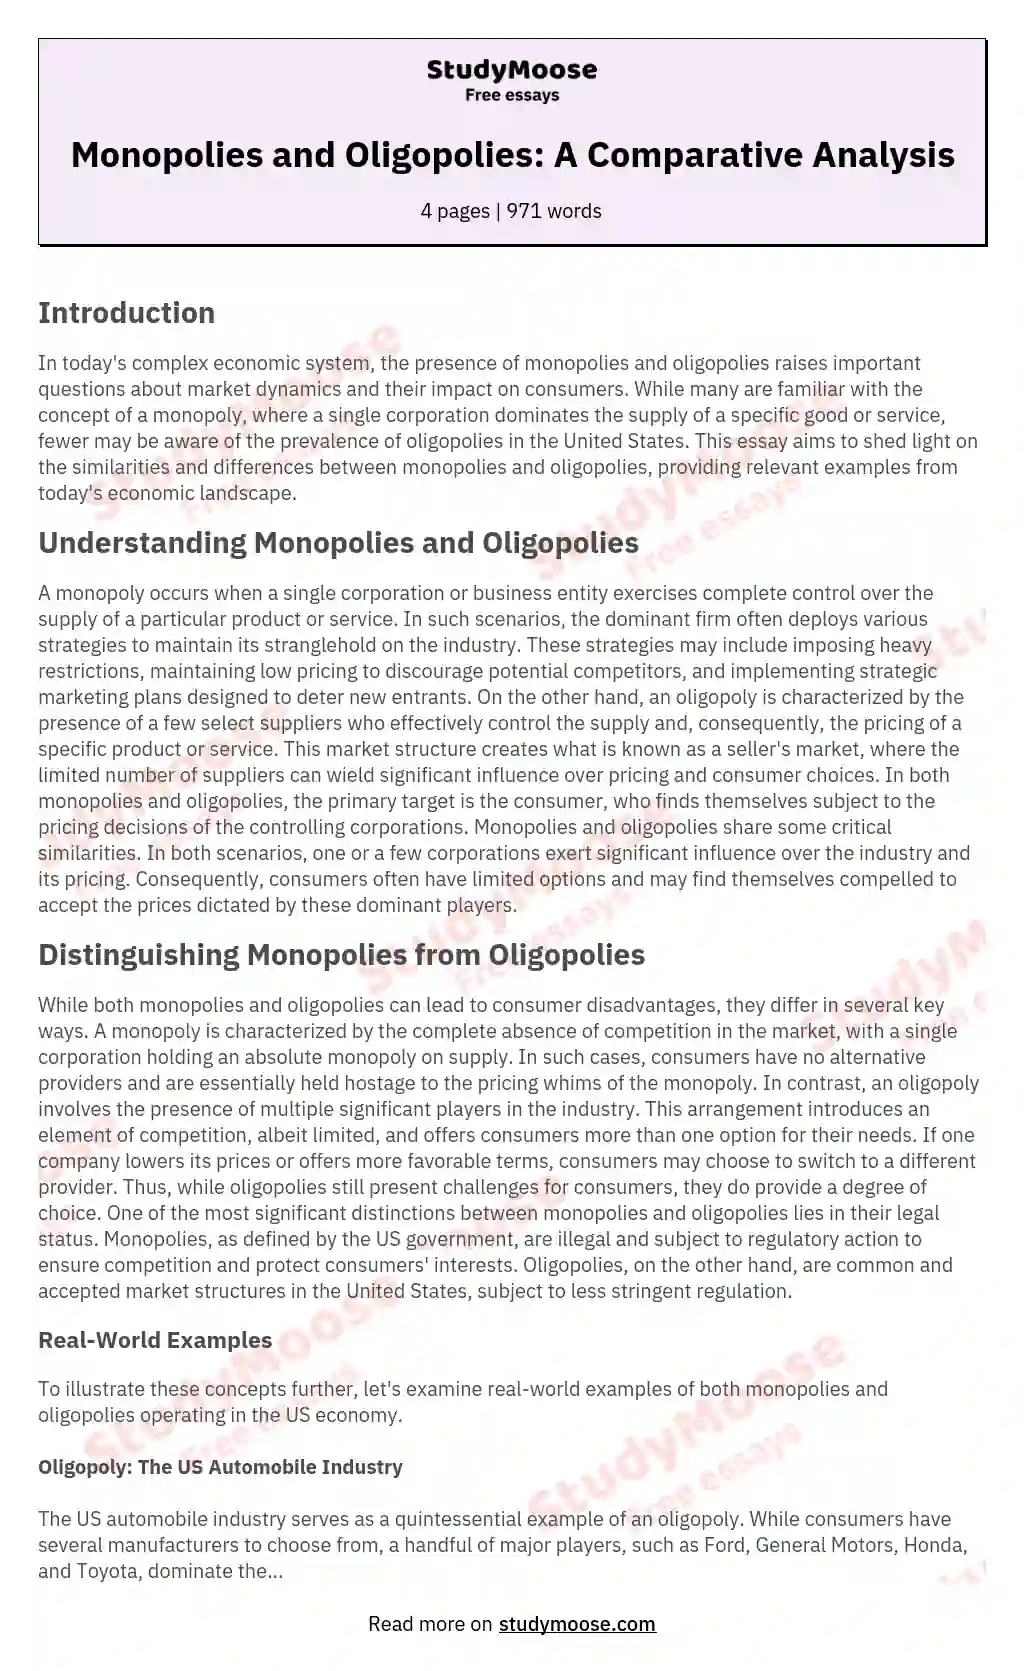 Monopolies and Oligopolies: A Comparative Analysis essay